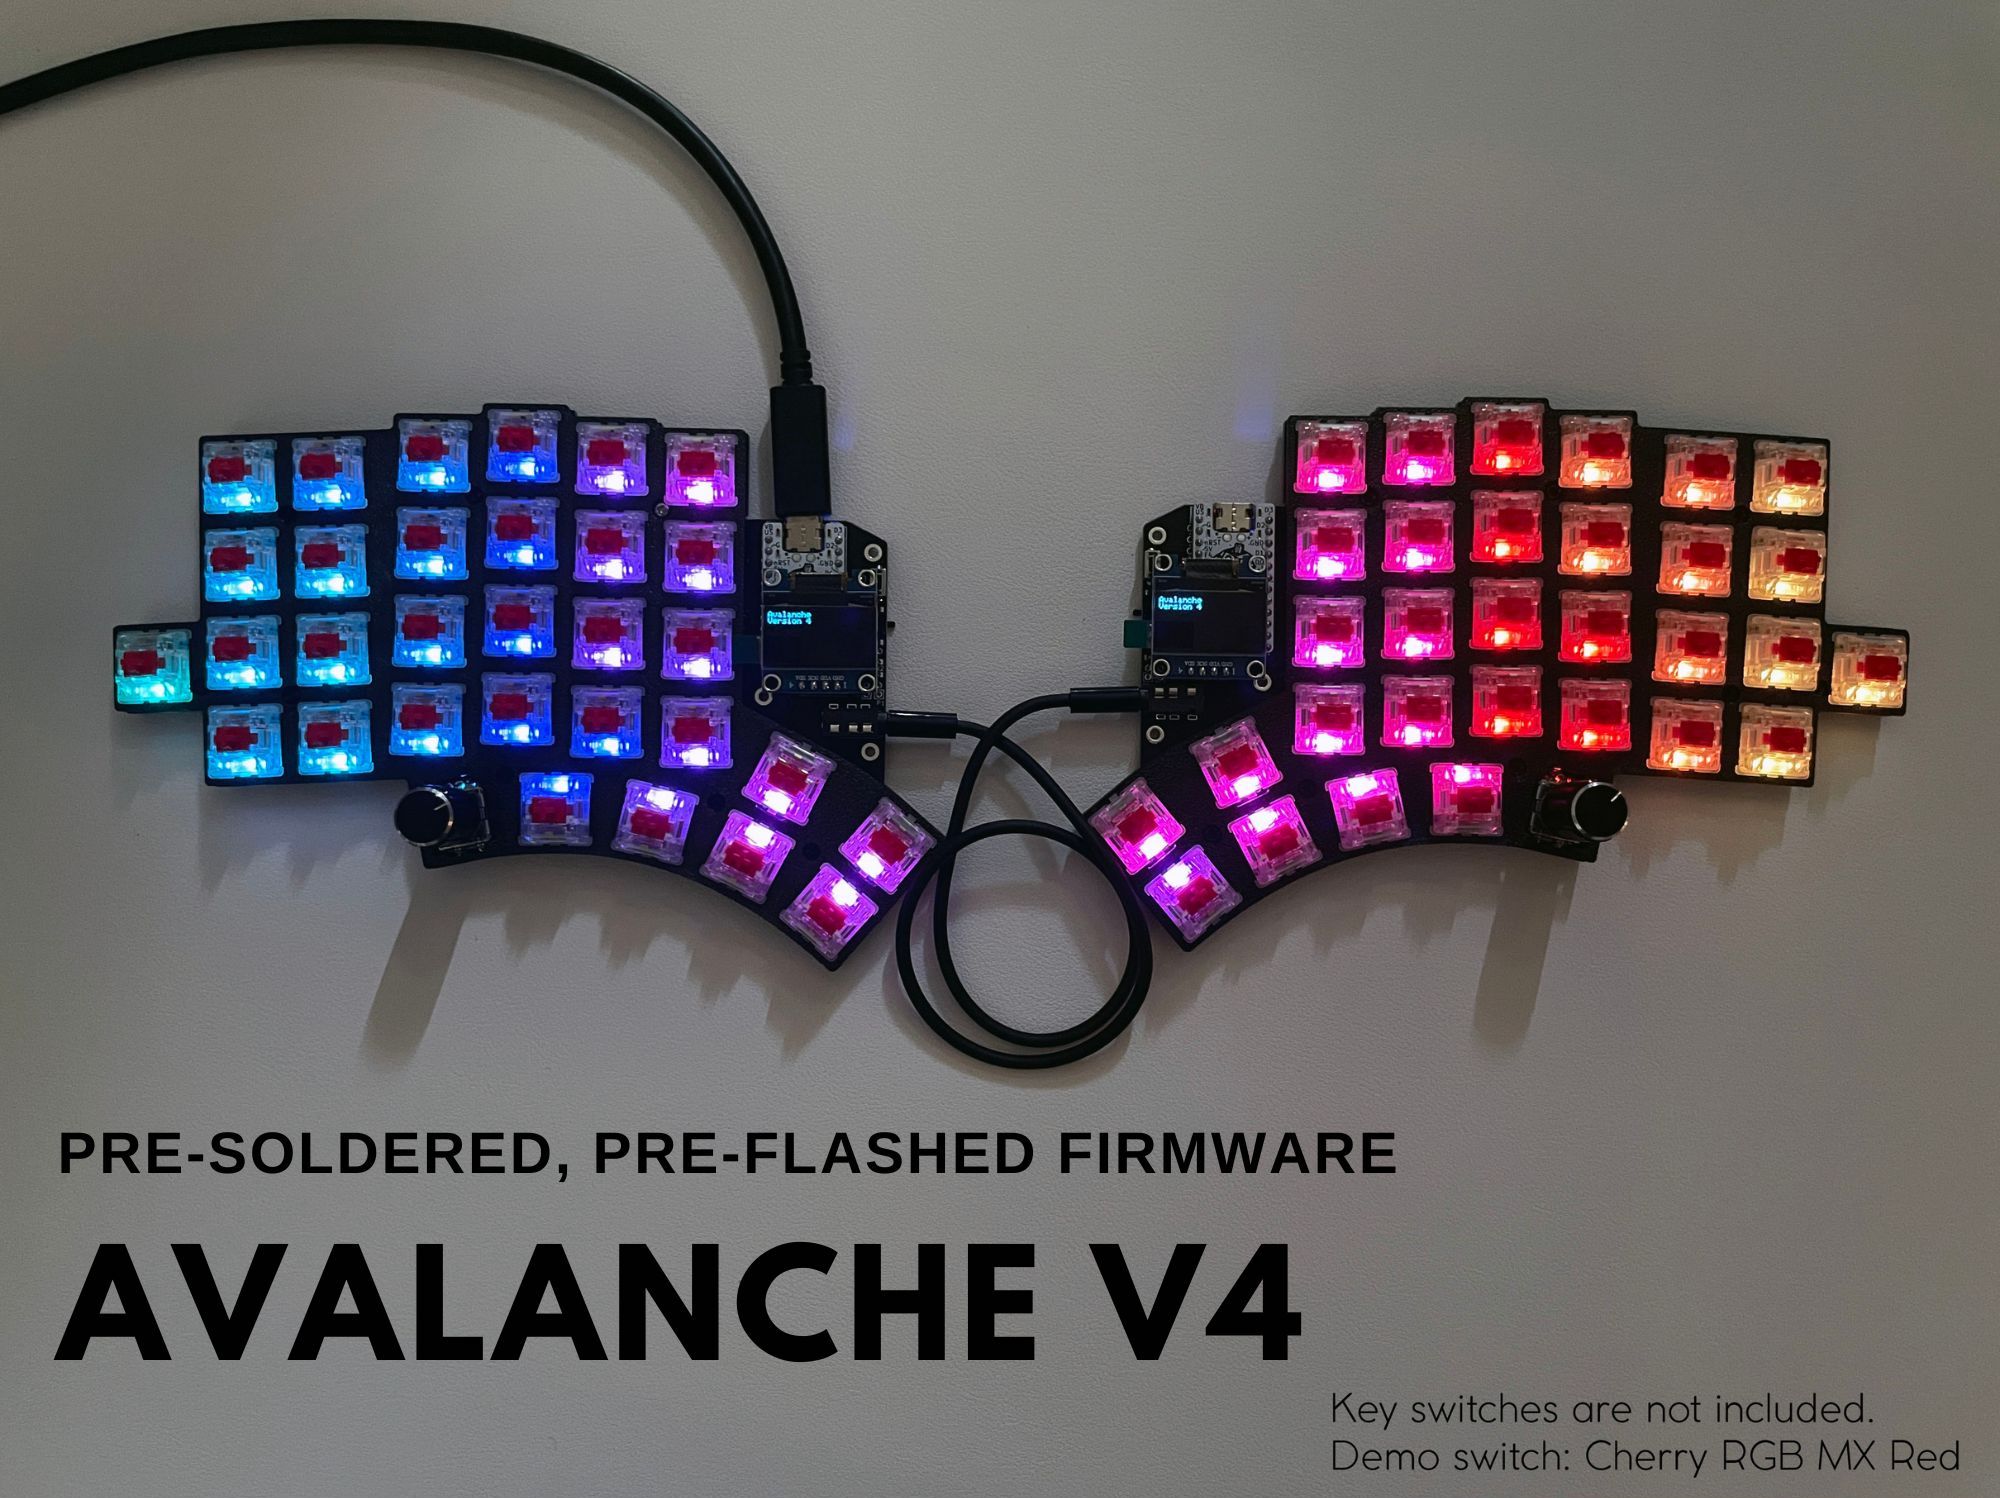 Avalanche v4 (v4.2) 40 or 60% Split Ergonomic Keyboard Kit